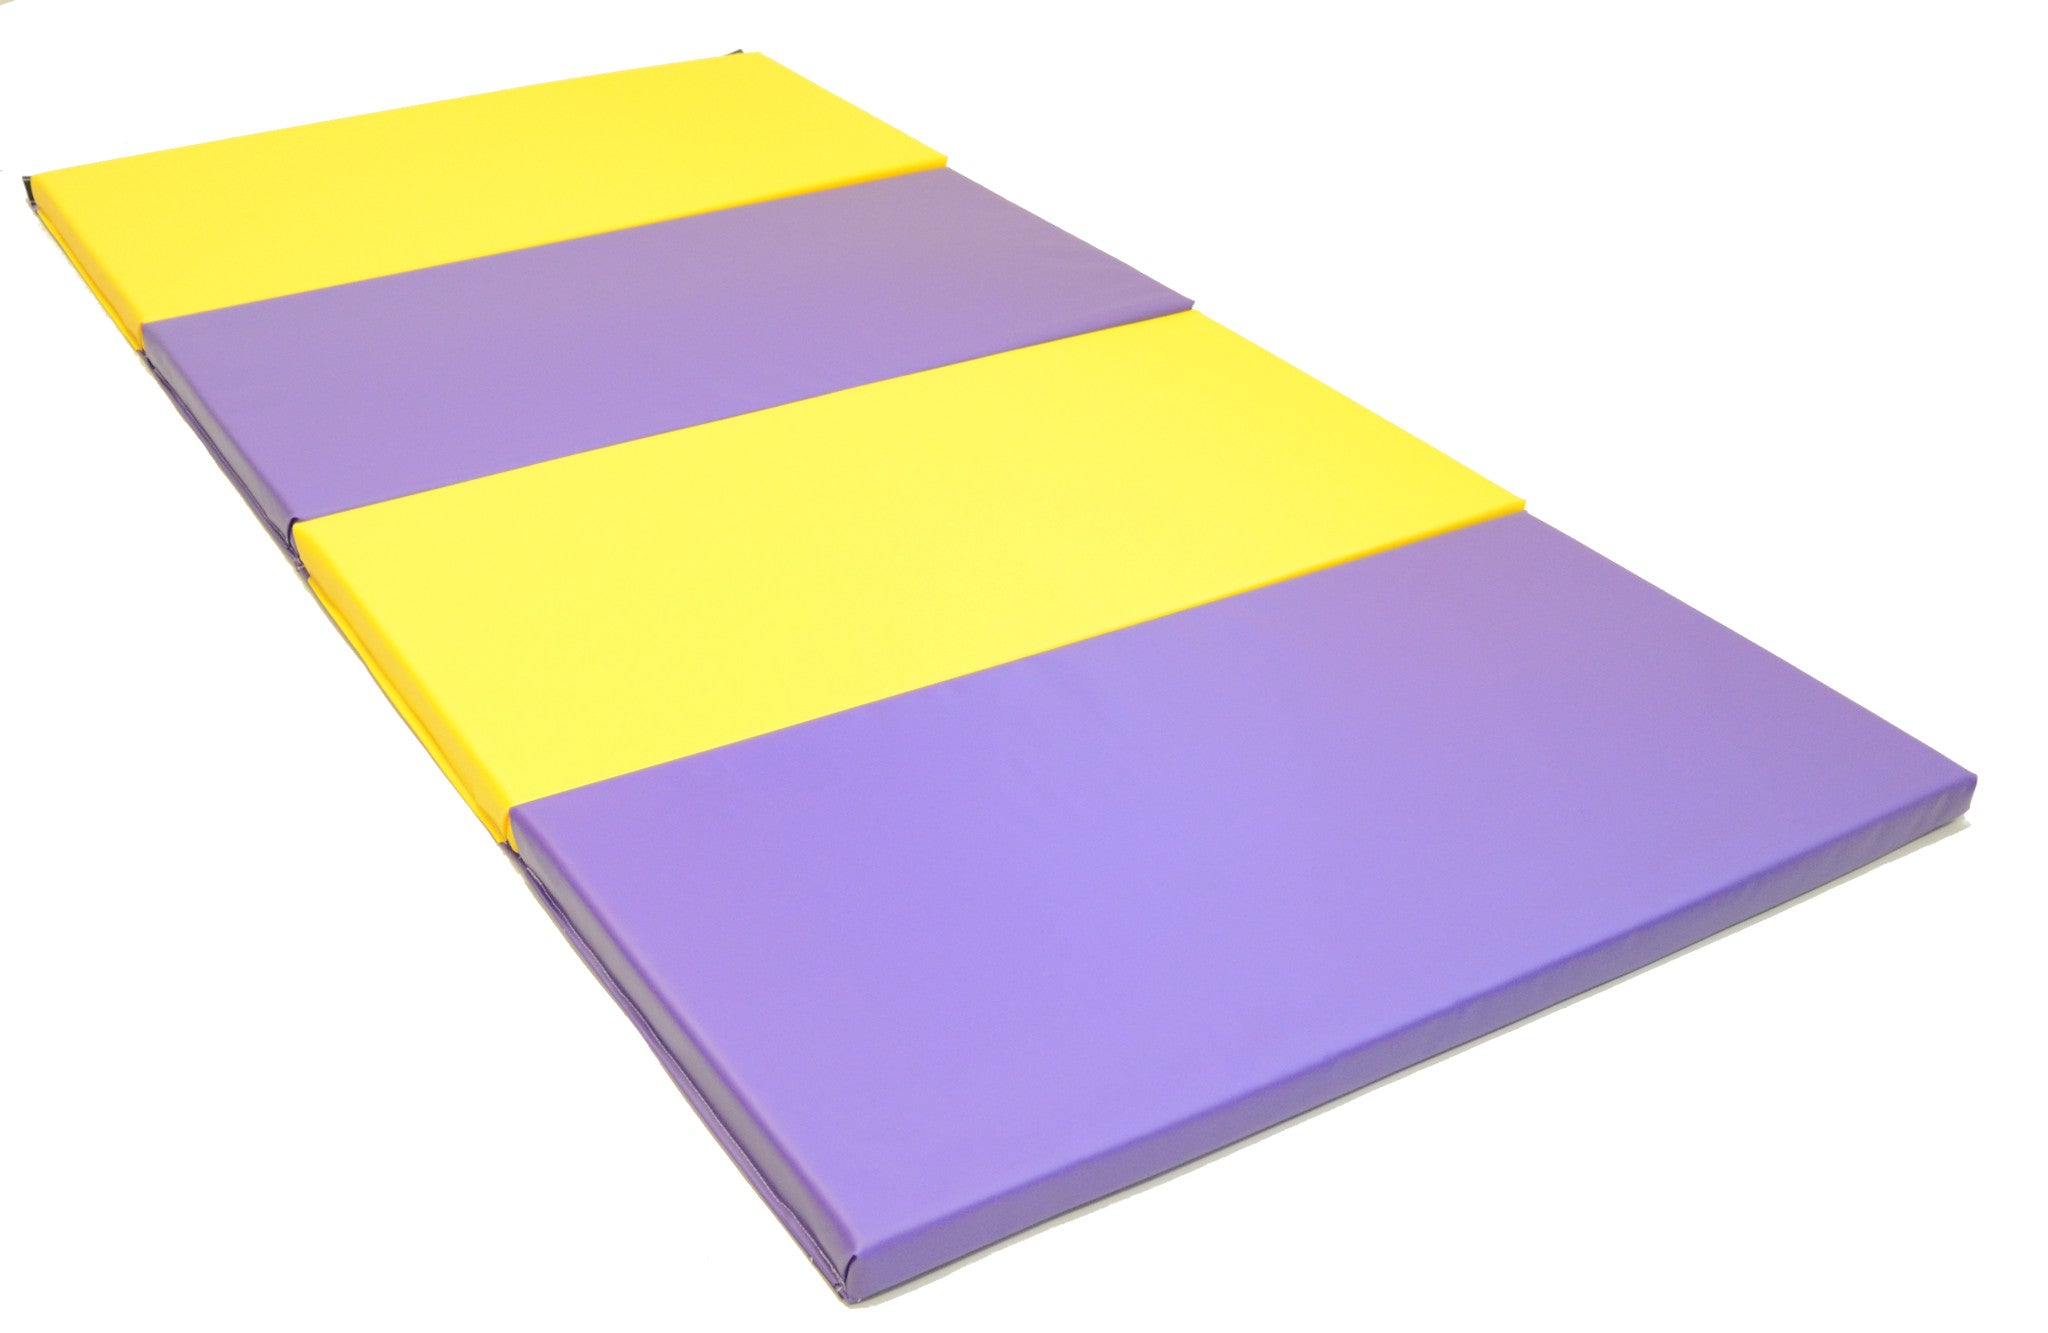 4' x 8' x 2" Intermediate Level Folding Gymnastics Mat